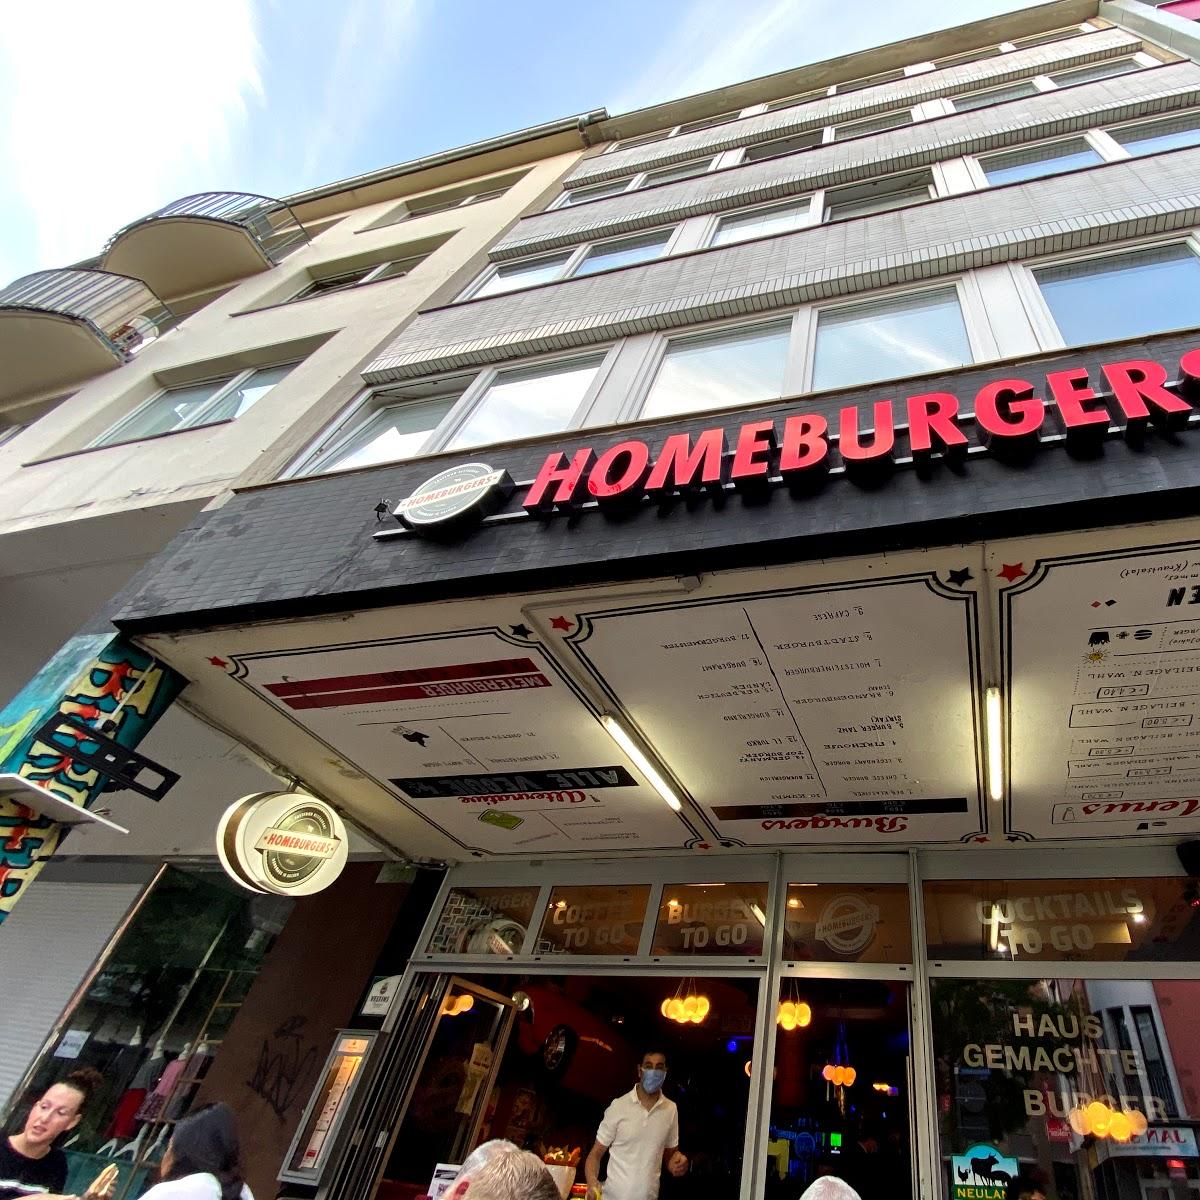 Restaurant "Homeburgers" in  Aachen